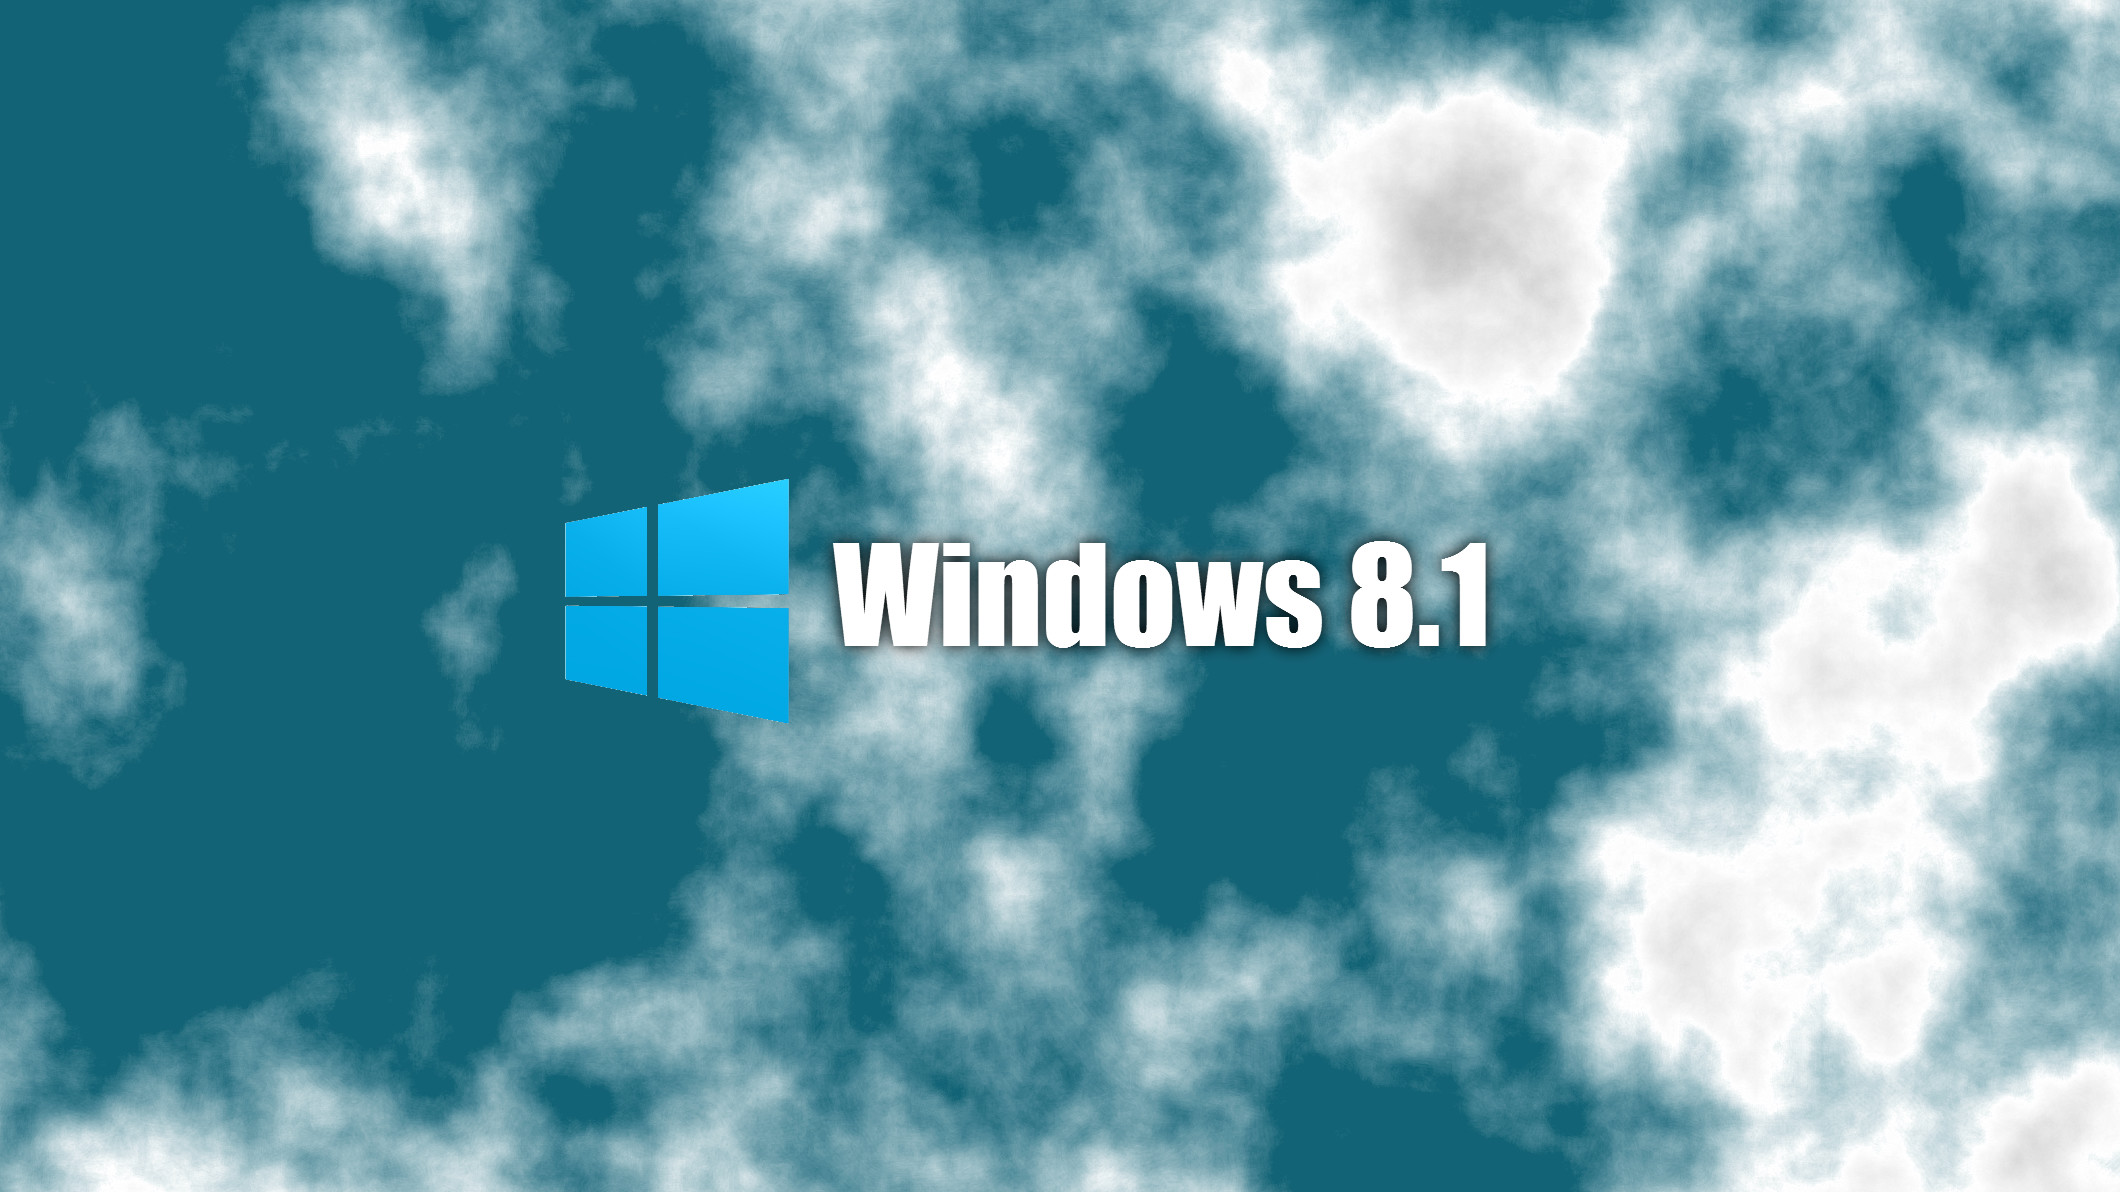 2120x1192 windows_8_1_desktop_background_by_theradiationmaster-d7dra4f  wallpaper_windows_8_1_snes_style_by_jamessalvation-d7judbp ...